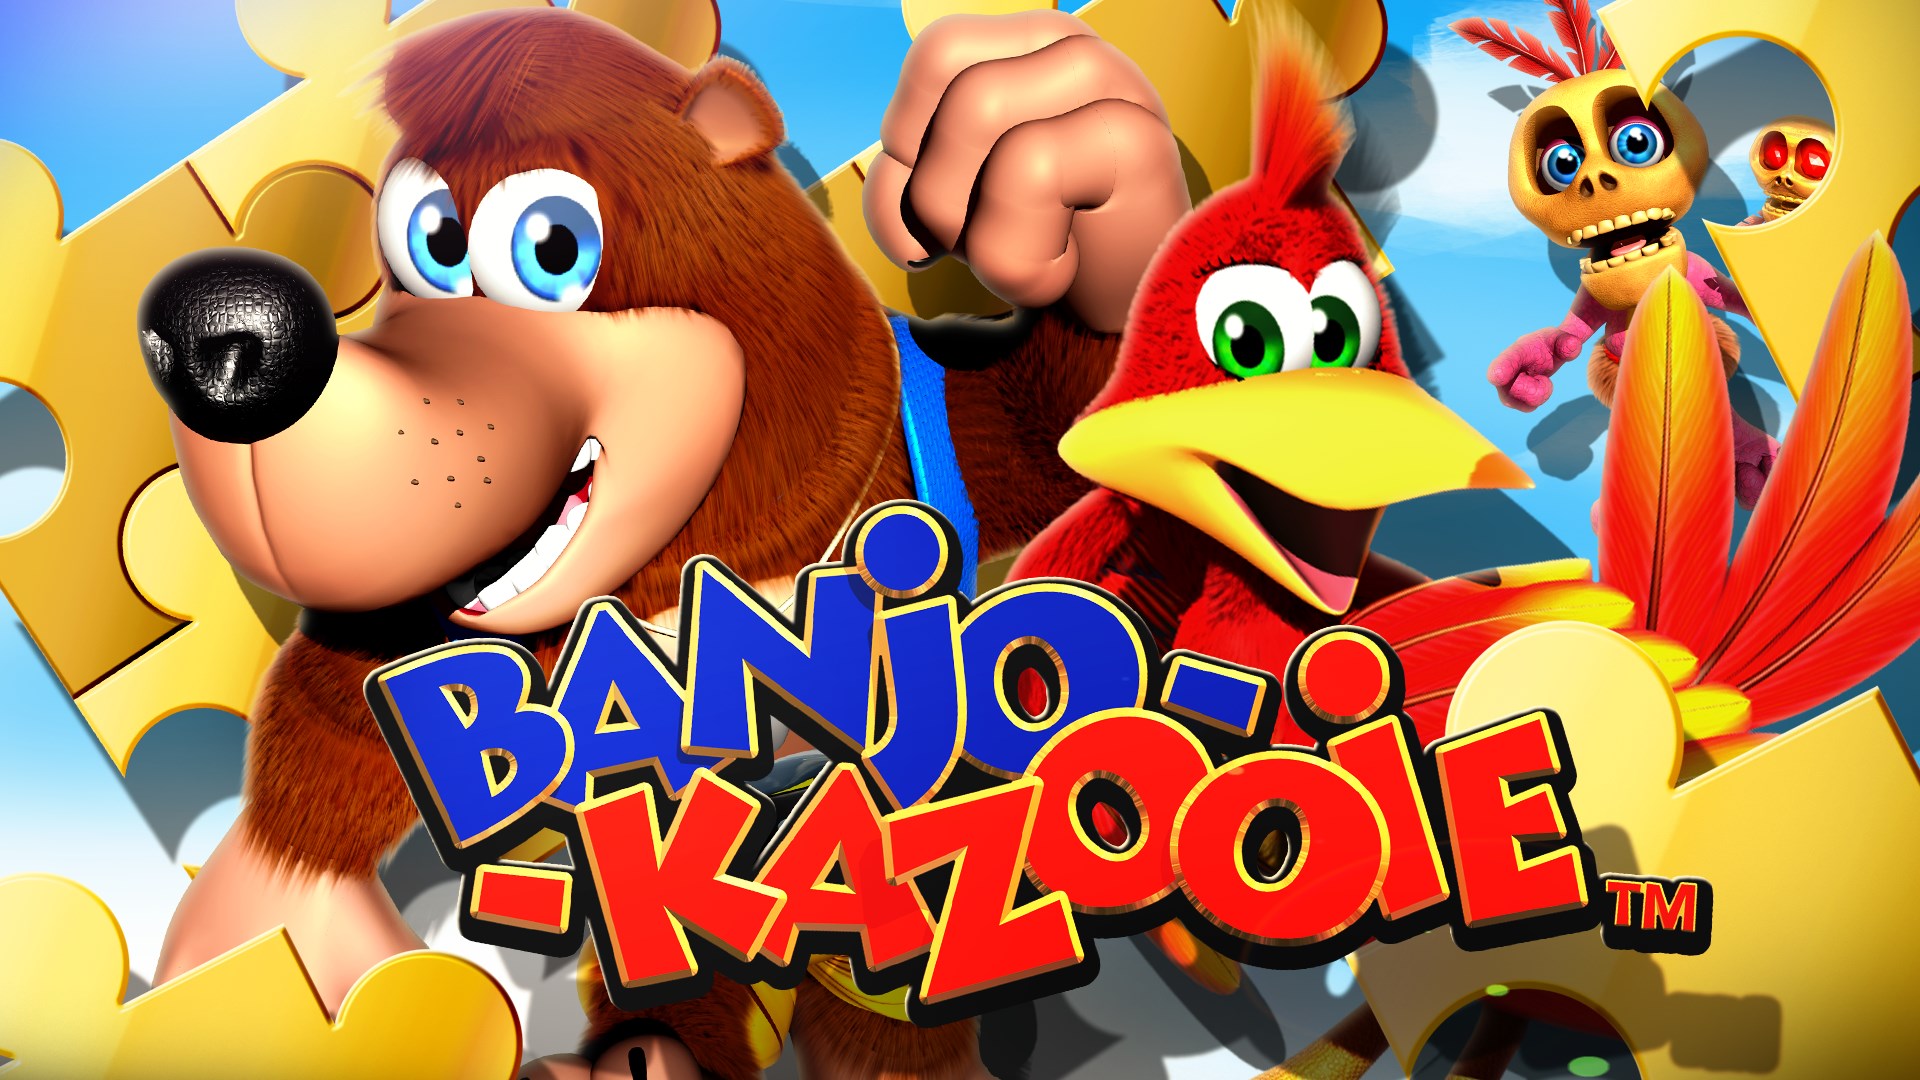 Xbox Boss Acknowledges Demand for Banjo-Kazooie Revival